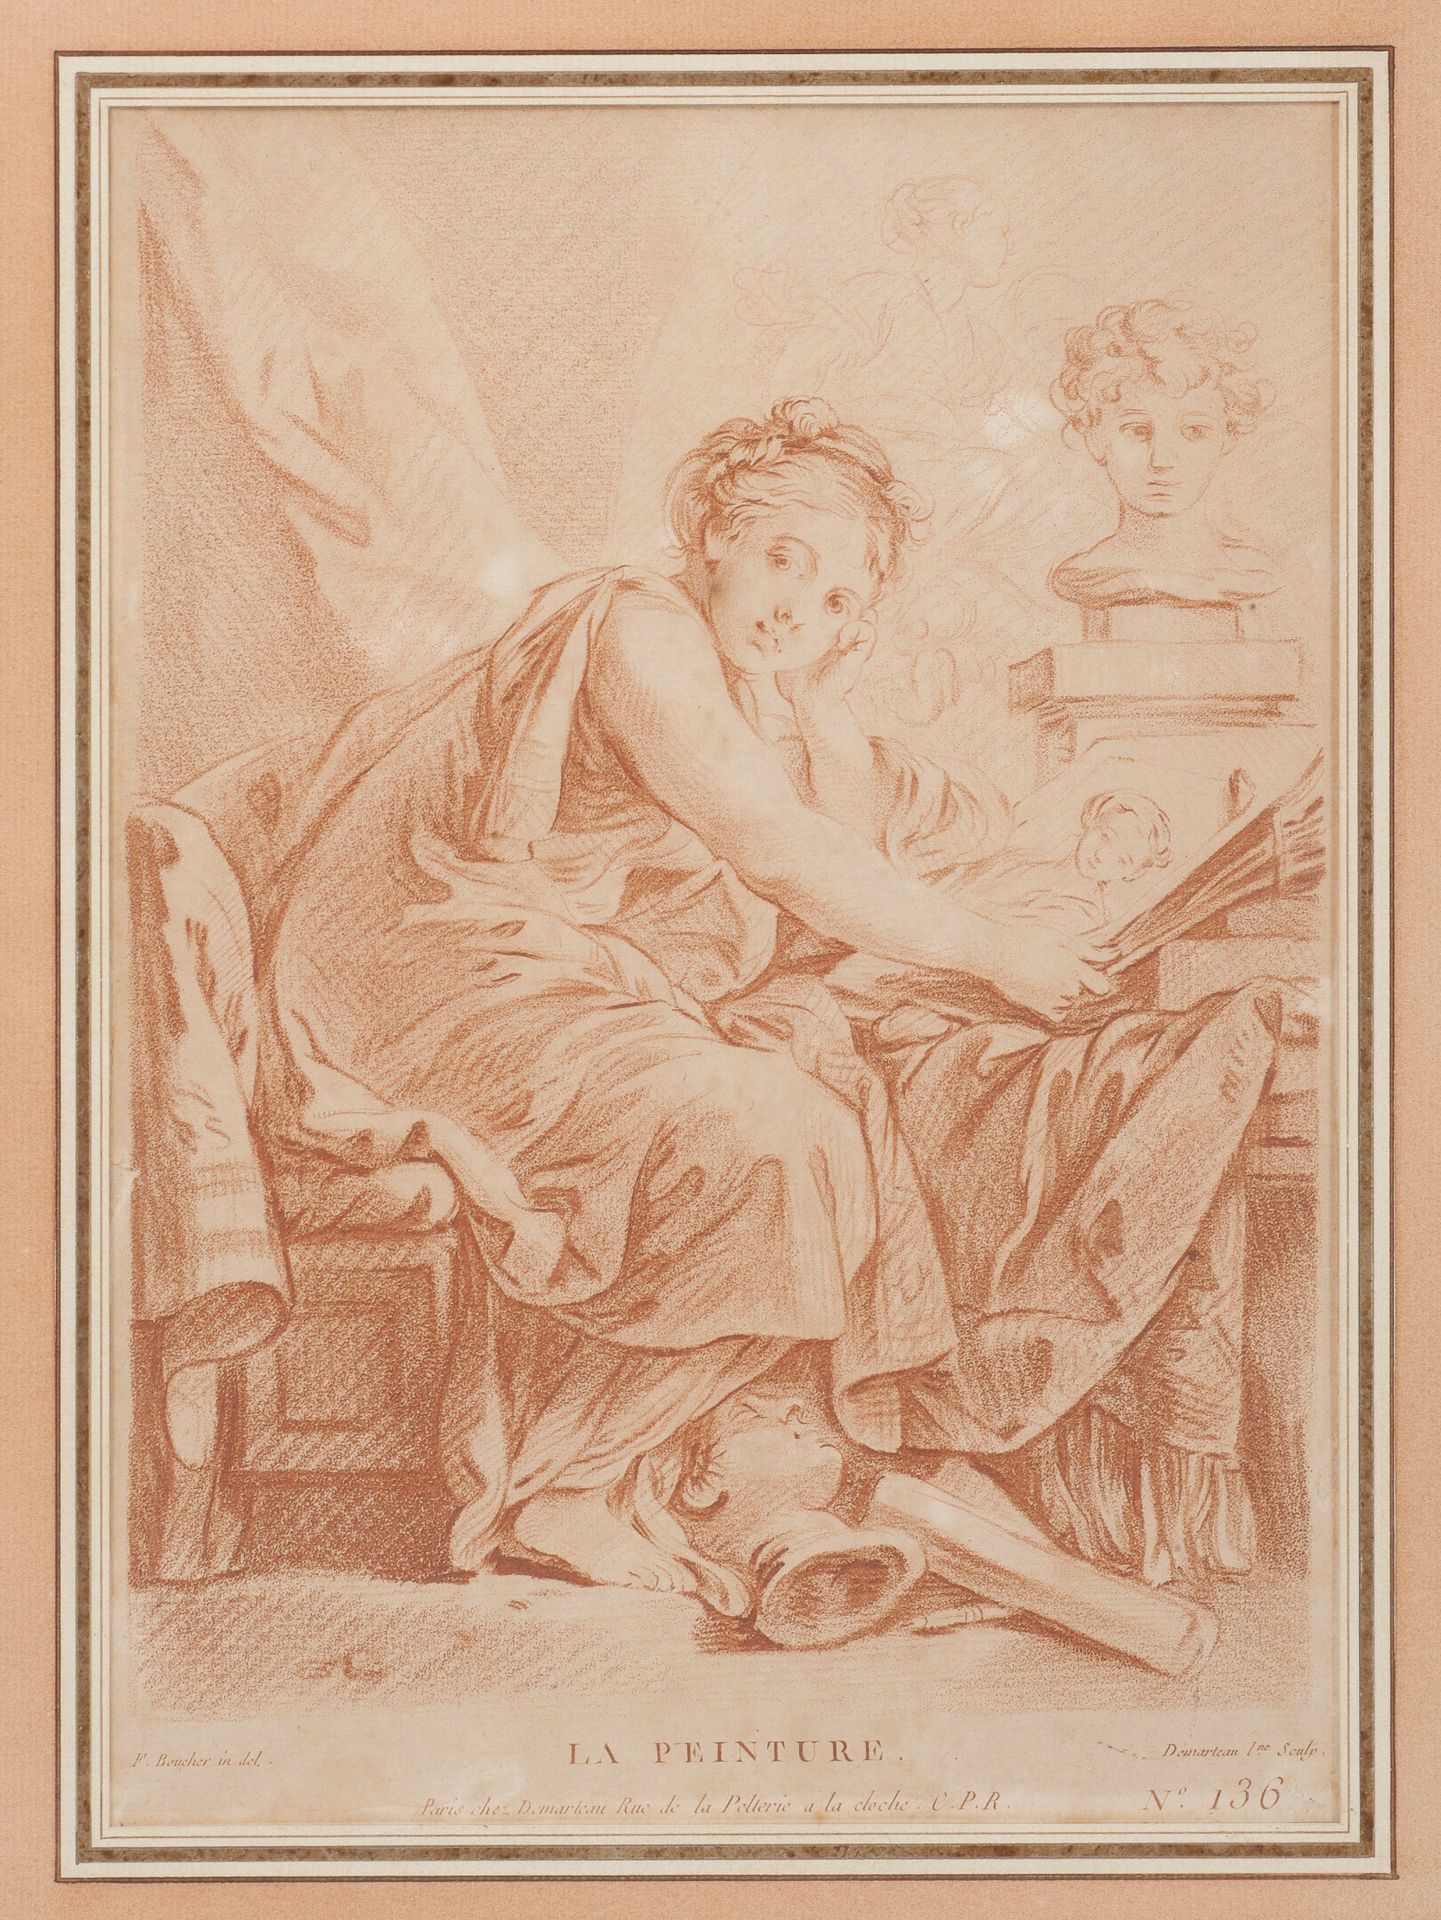 D'après François BOUCHER (1703-1770) Pittura.

Incisione alla maniera sanguigna.&hellip;